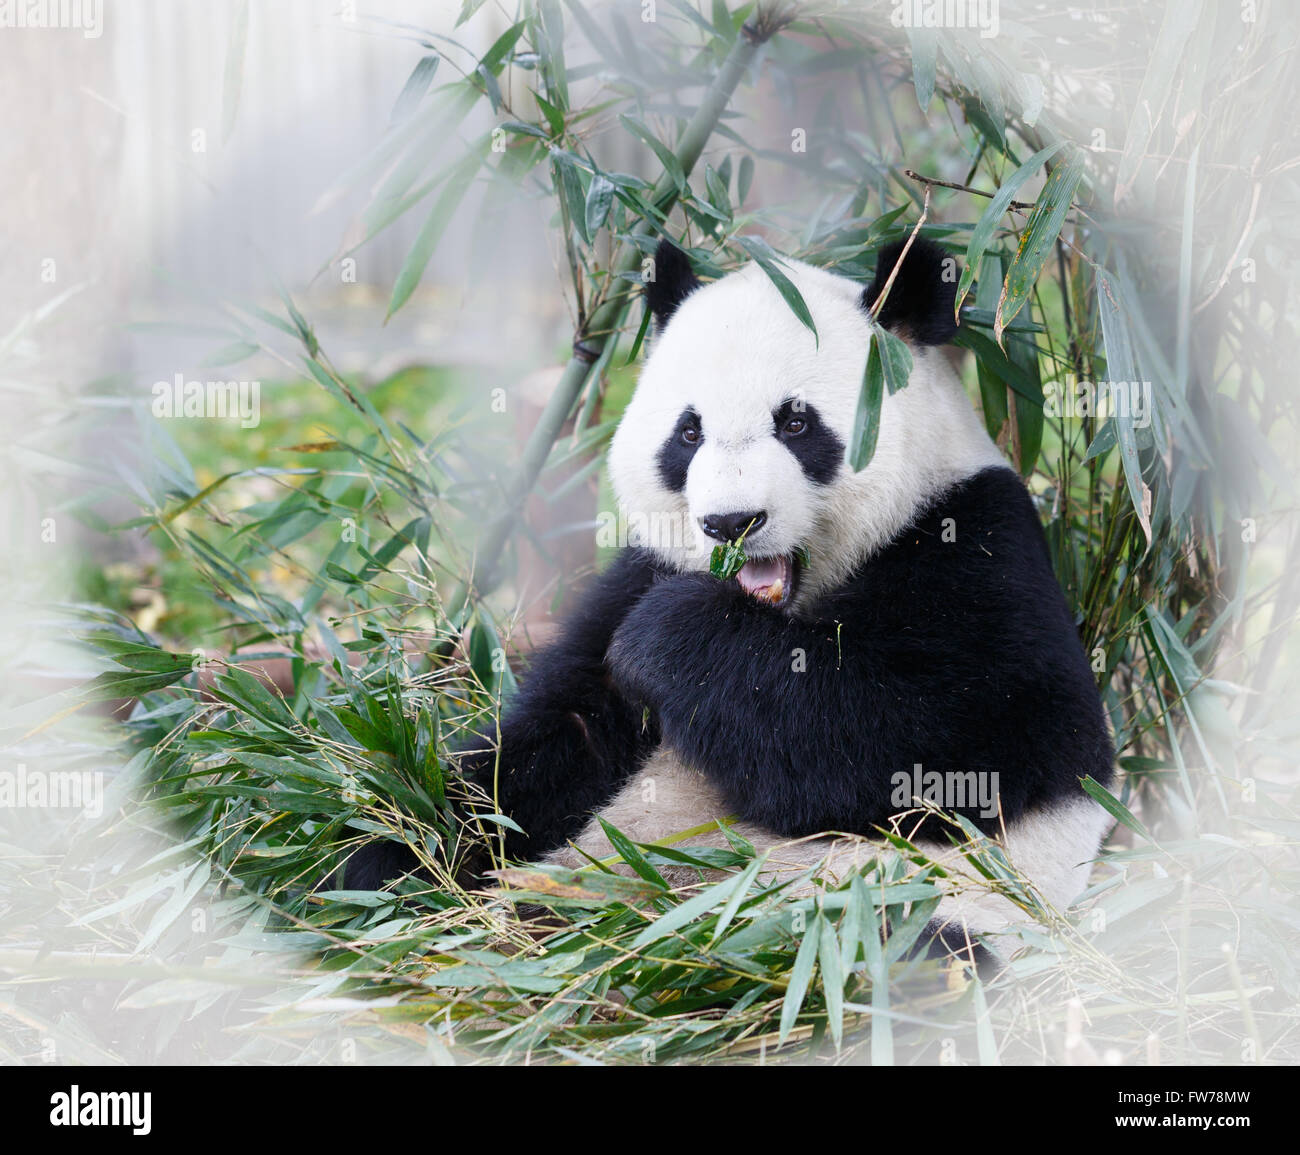 Hungry giant panda bear eating bamboo Stock Photo